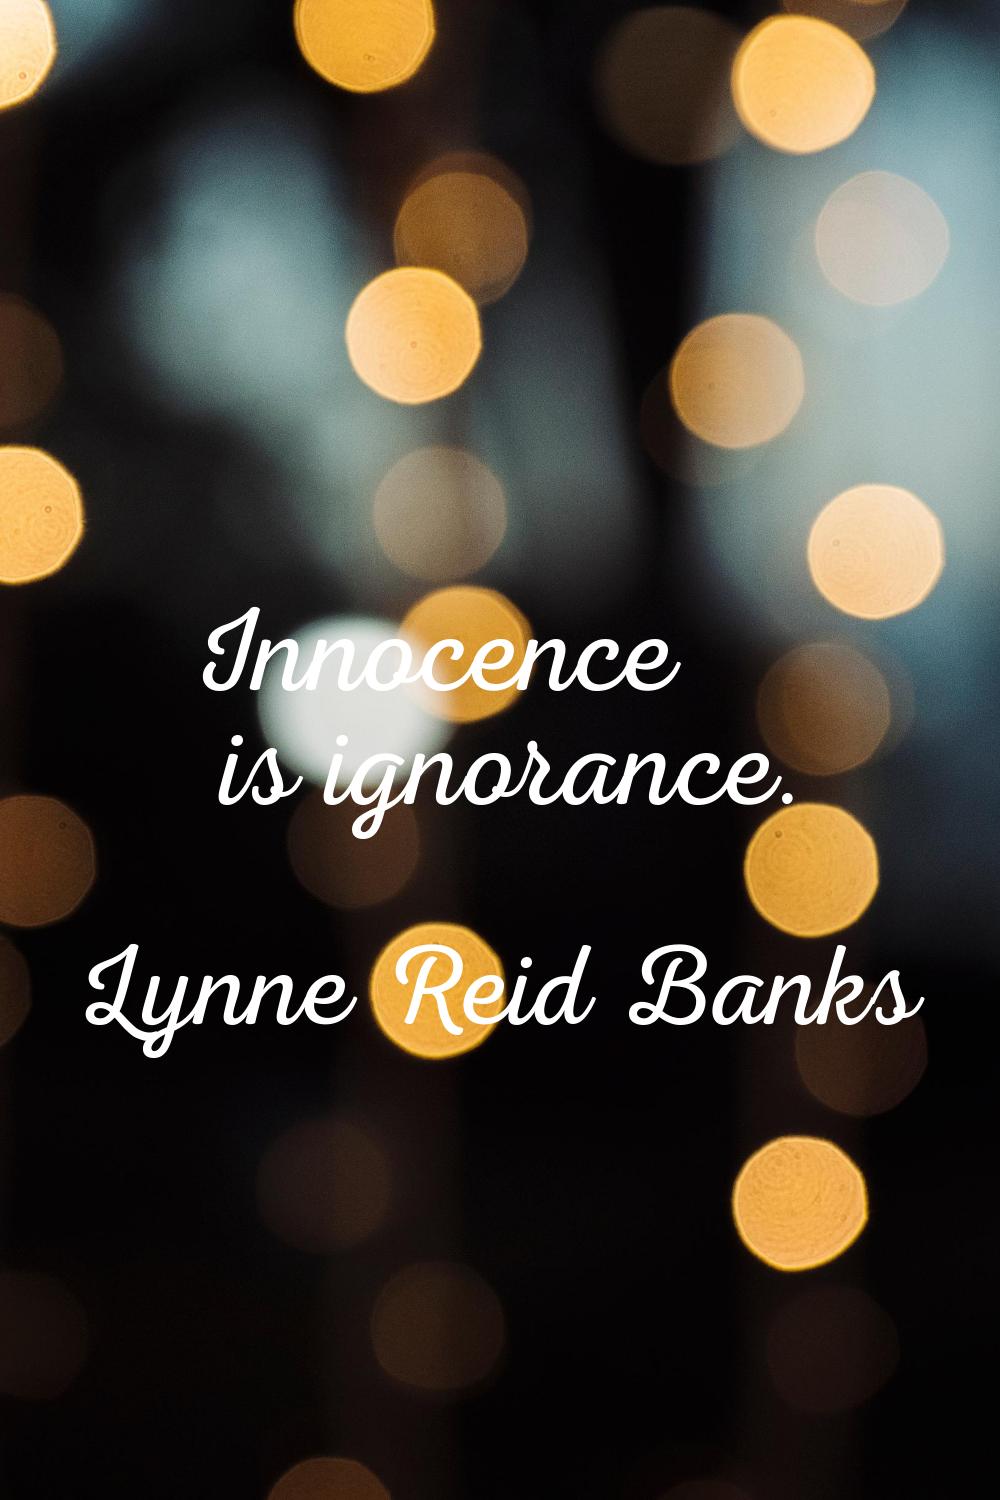 Innocence is ignorance.